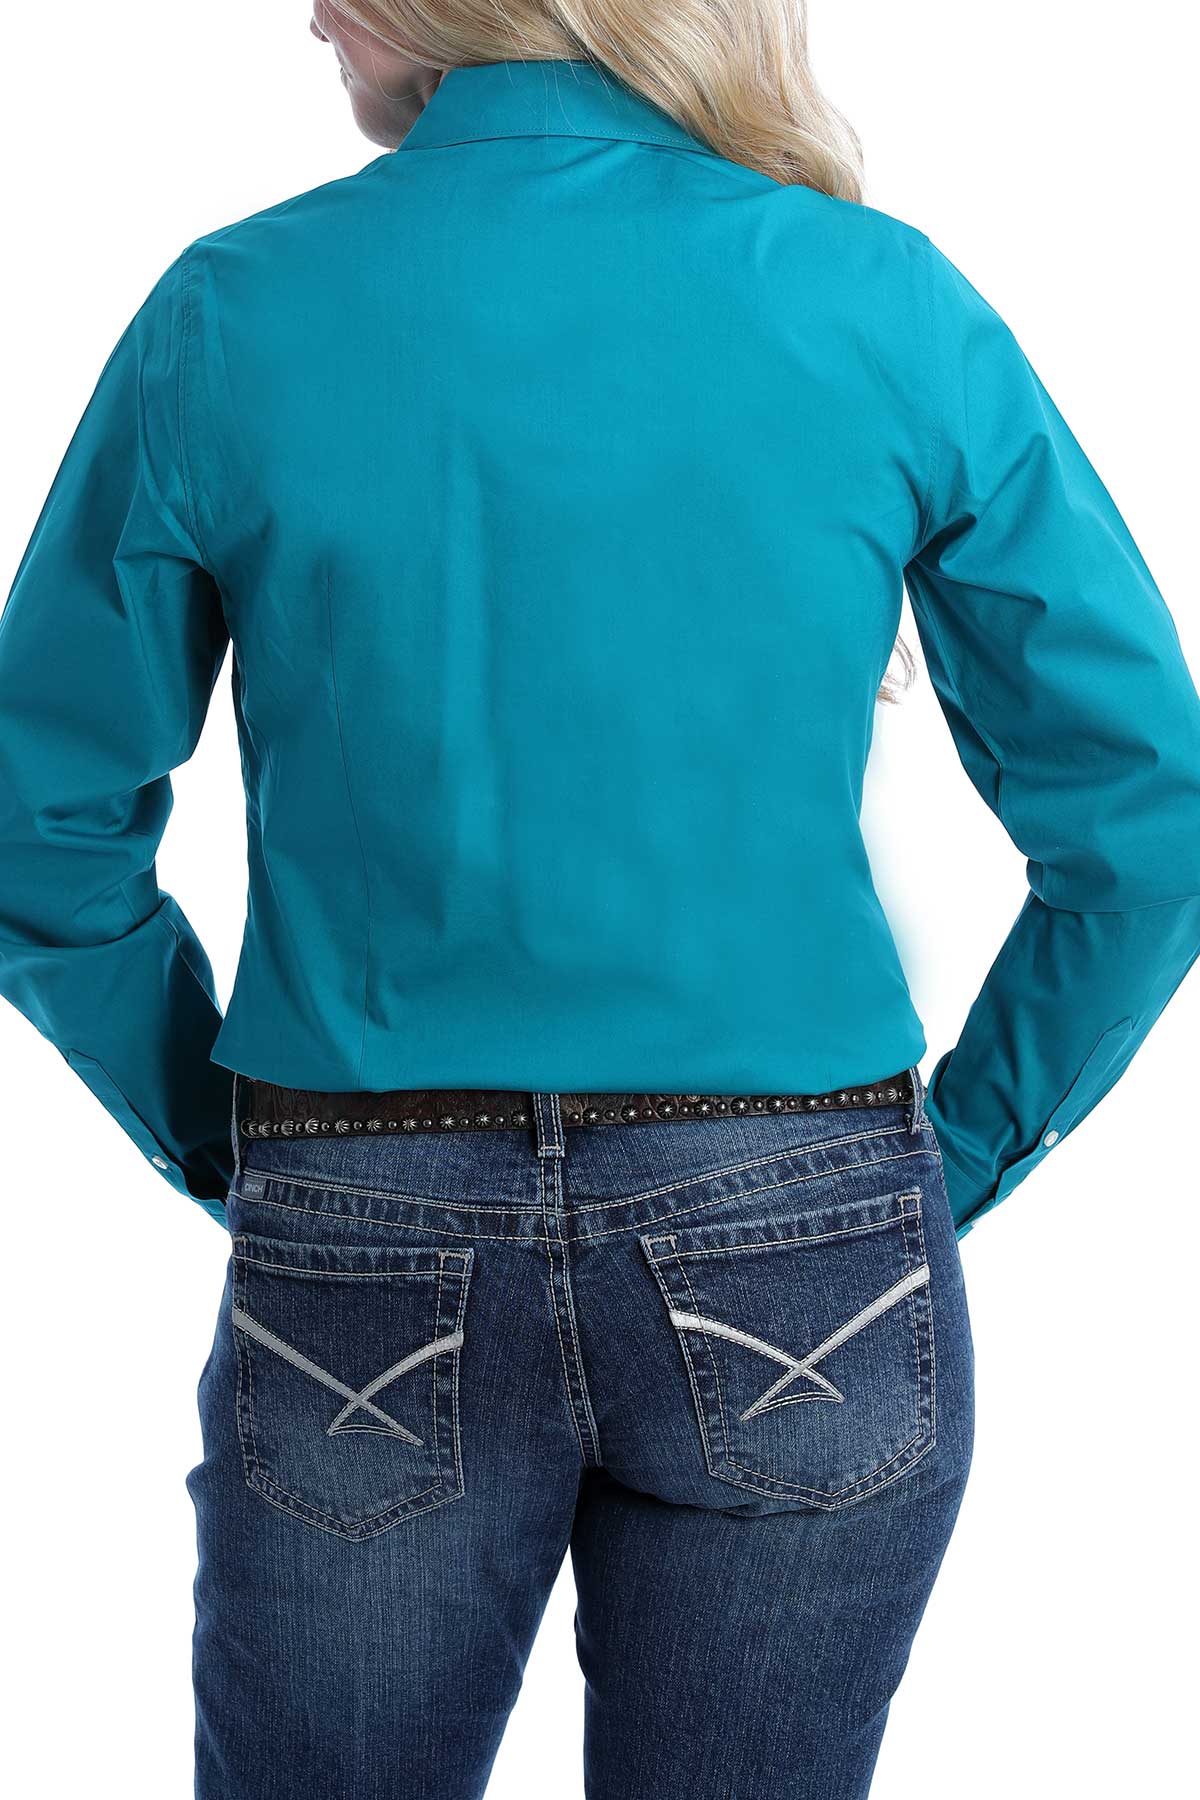 CINCH Women's Stretch Solid Teal Button-Down Western Shirt